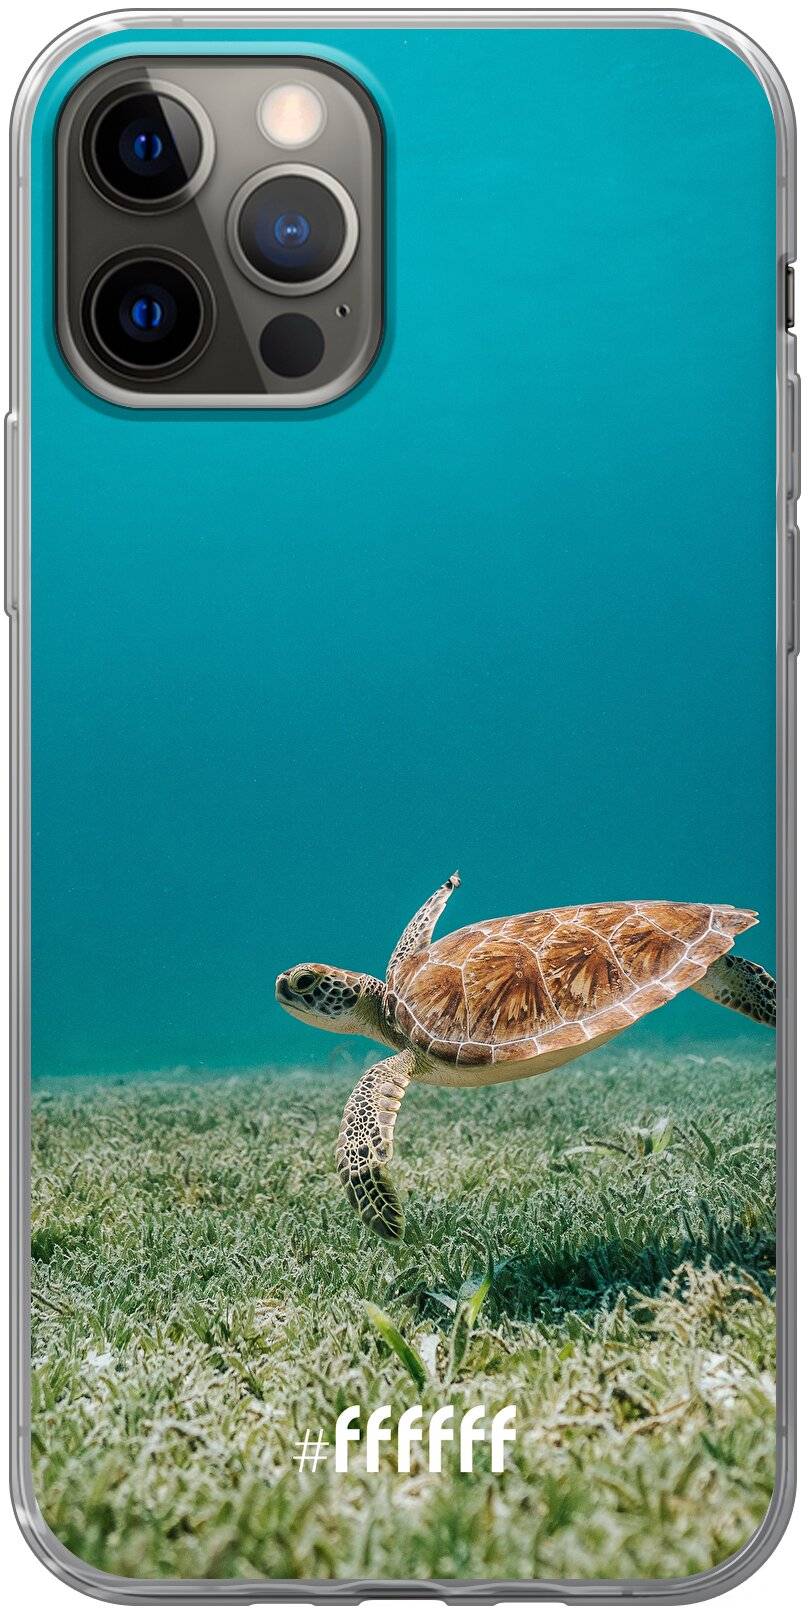 Turtle iPhone 12